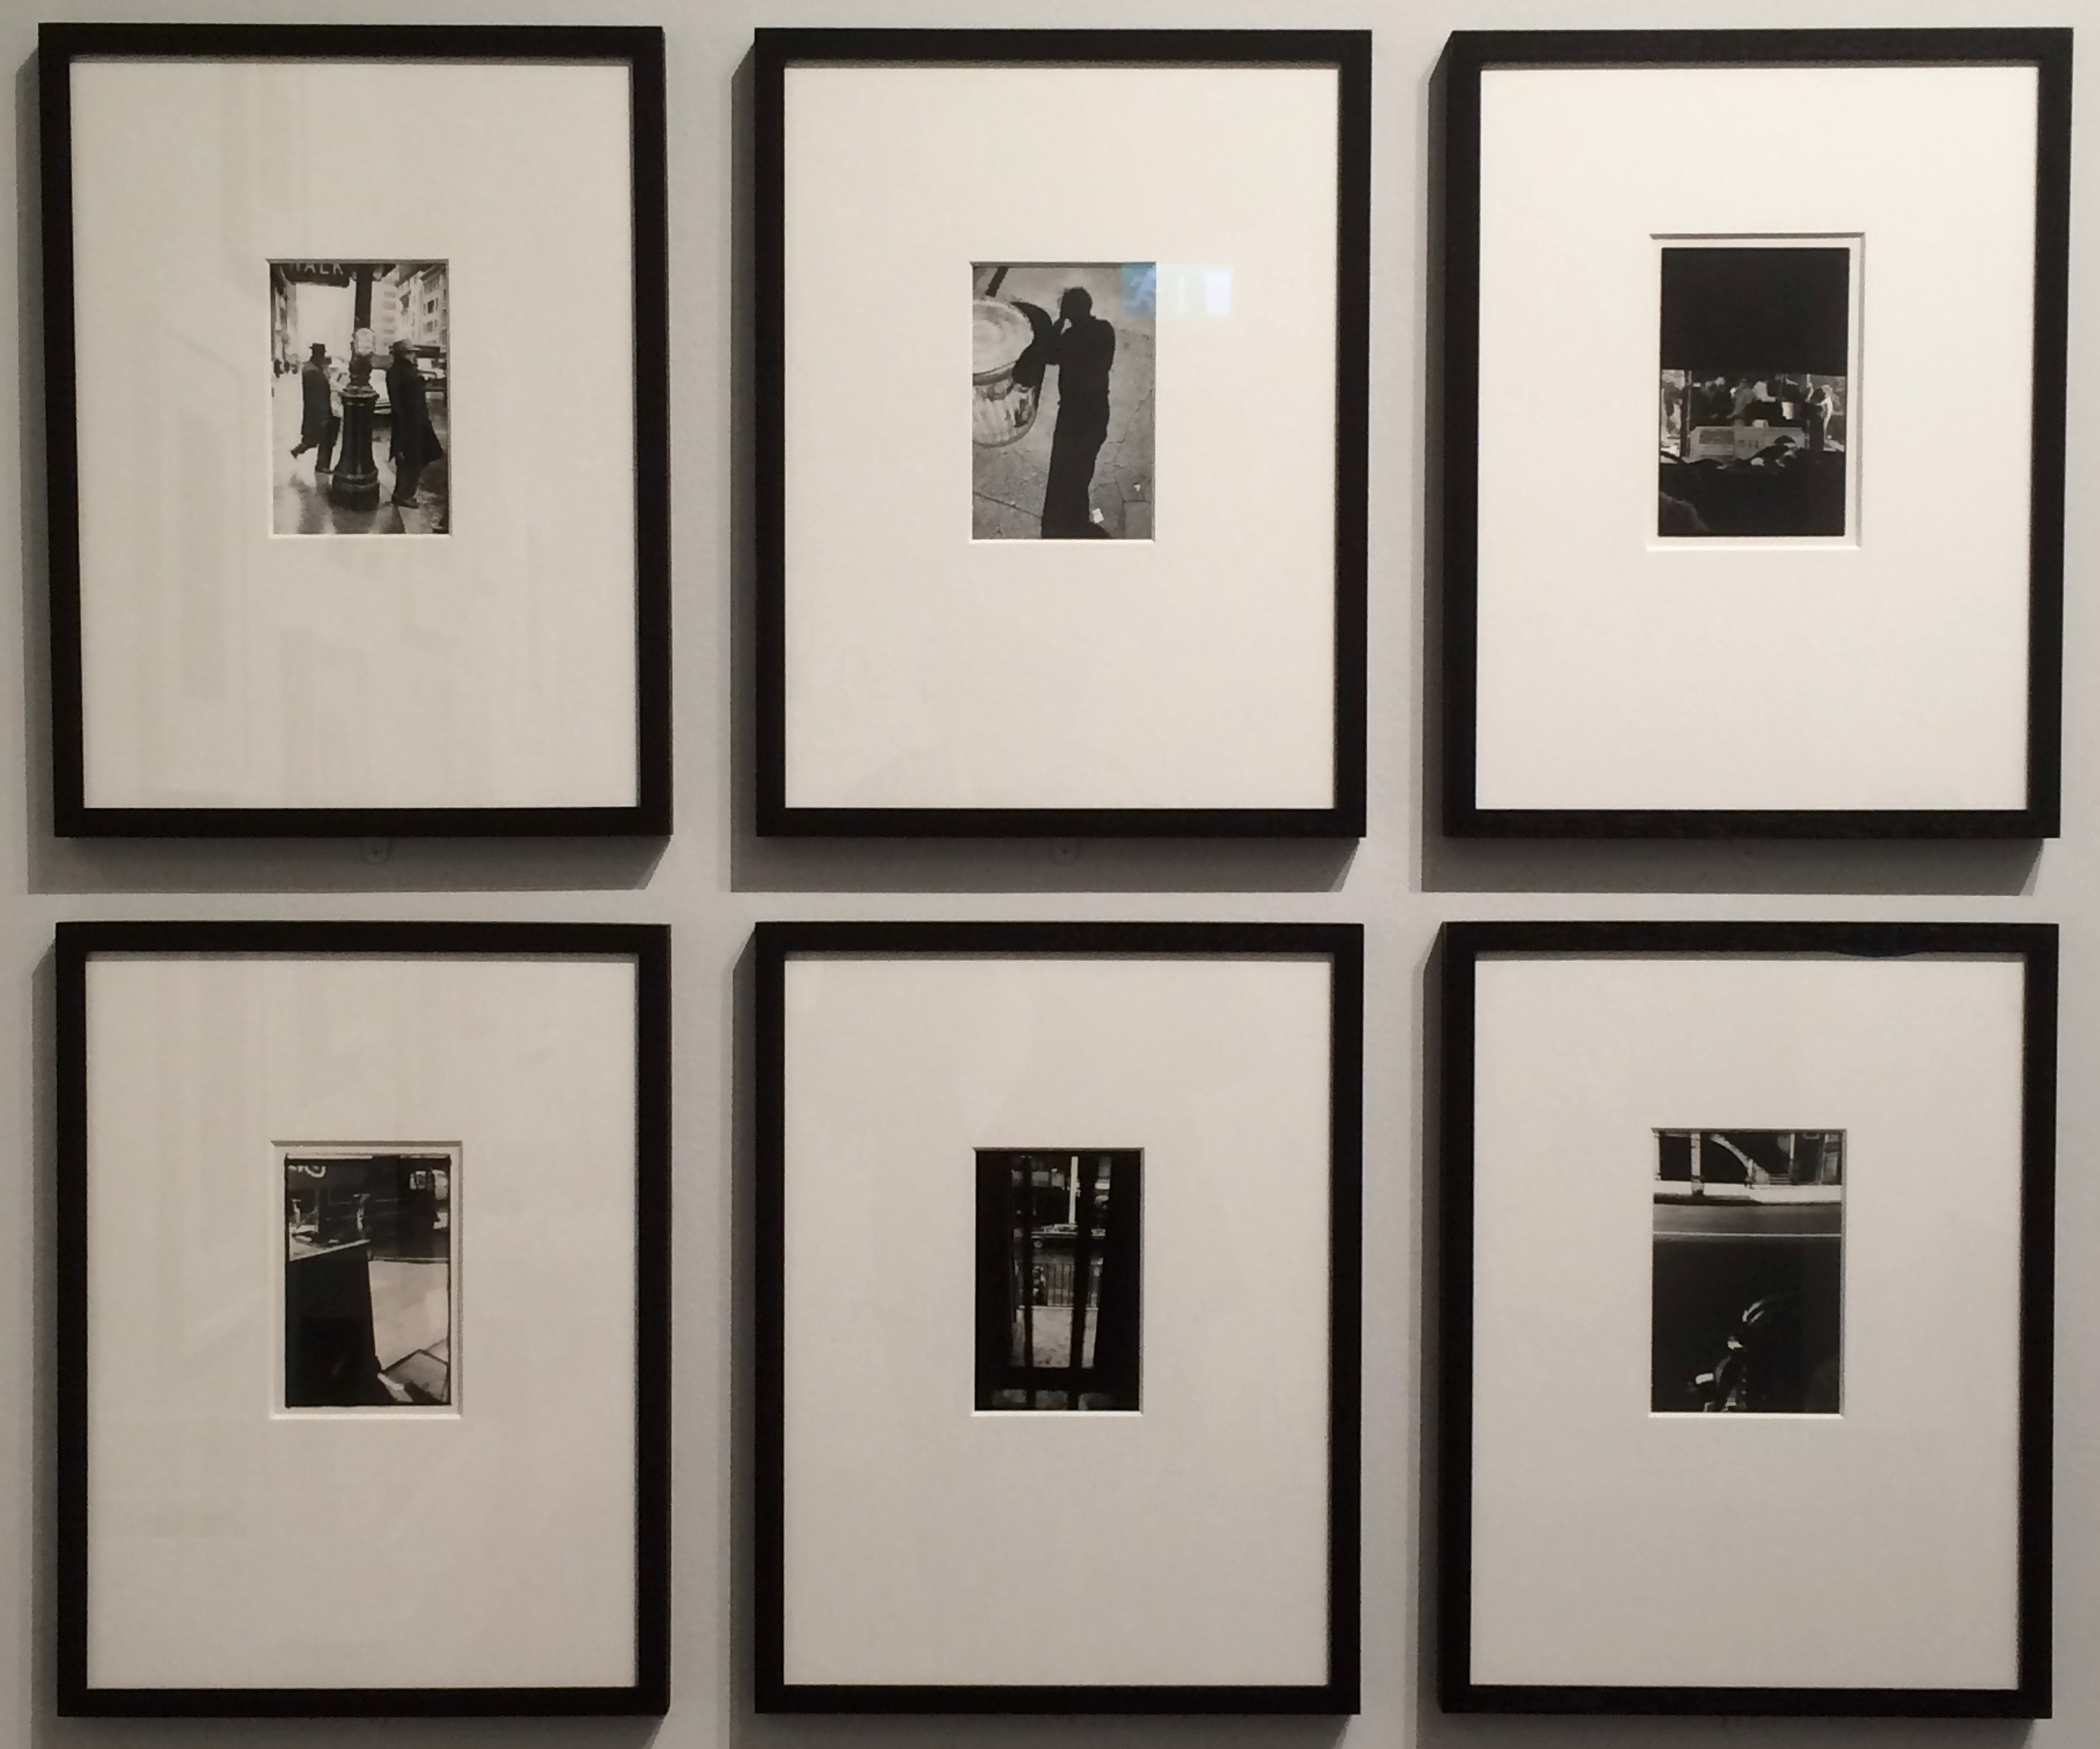 Postmen-1952 Saul-Leiter-Straf-Hat Saul Leiter: Retrospective - The Photographers Gallery, London